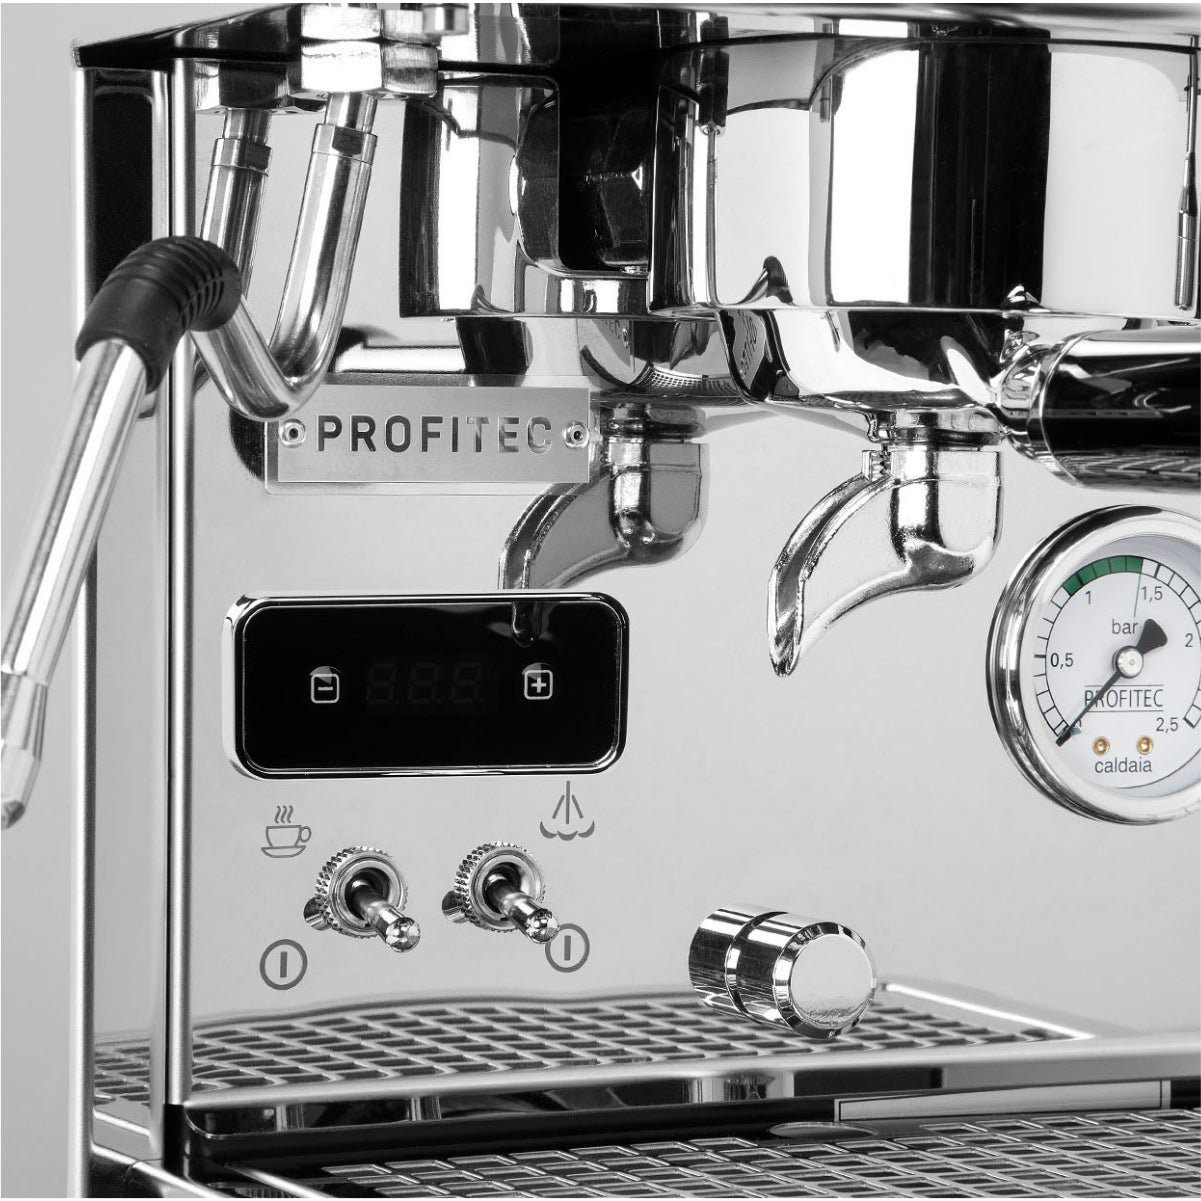 Profitec Pro 300 Espresso Machine (Stainless Steel)